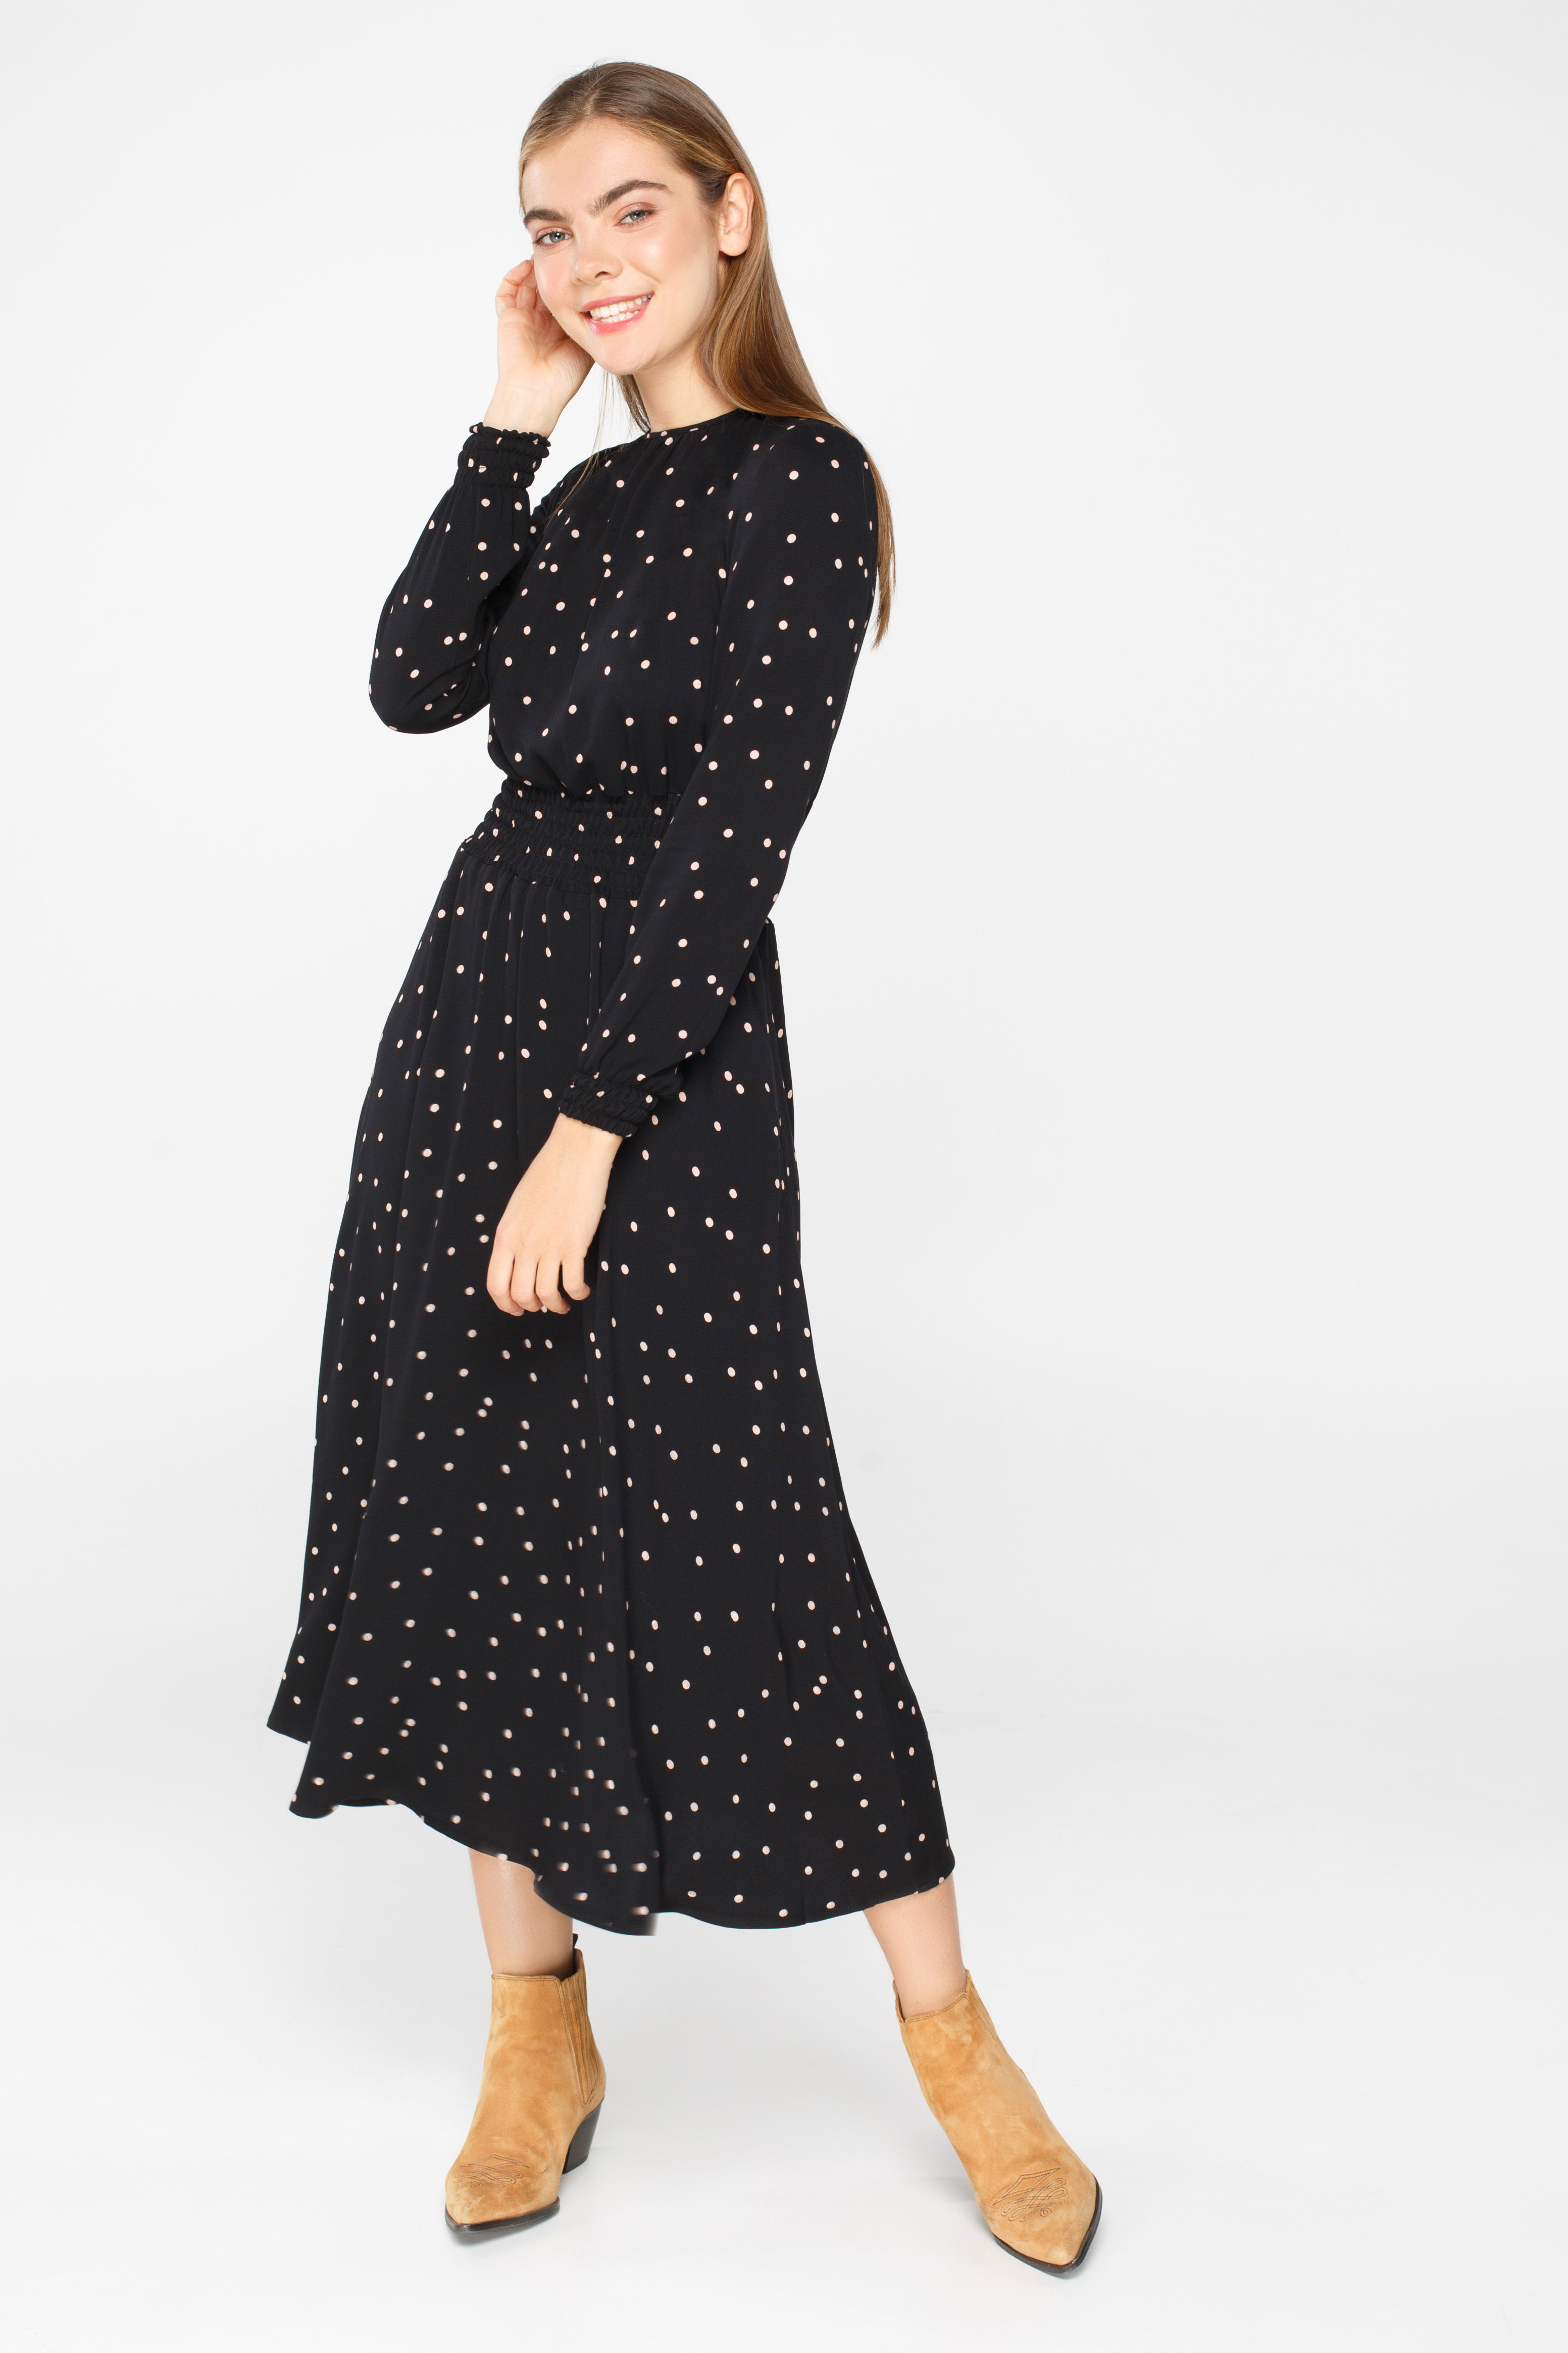 Black polka dot midi dress with elastic waist and cuffs , photo 3